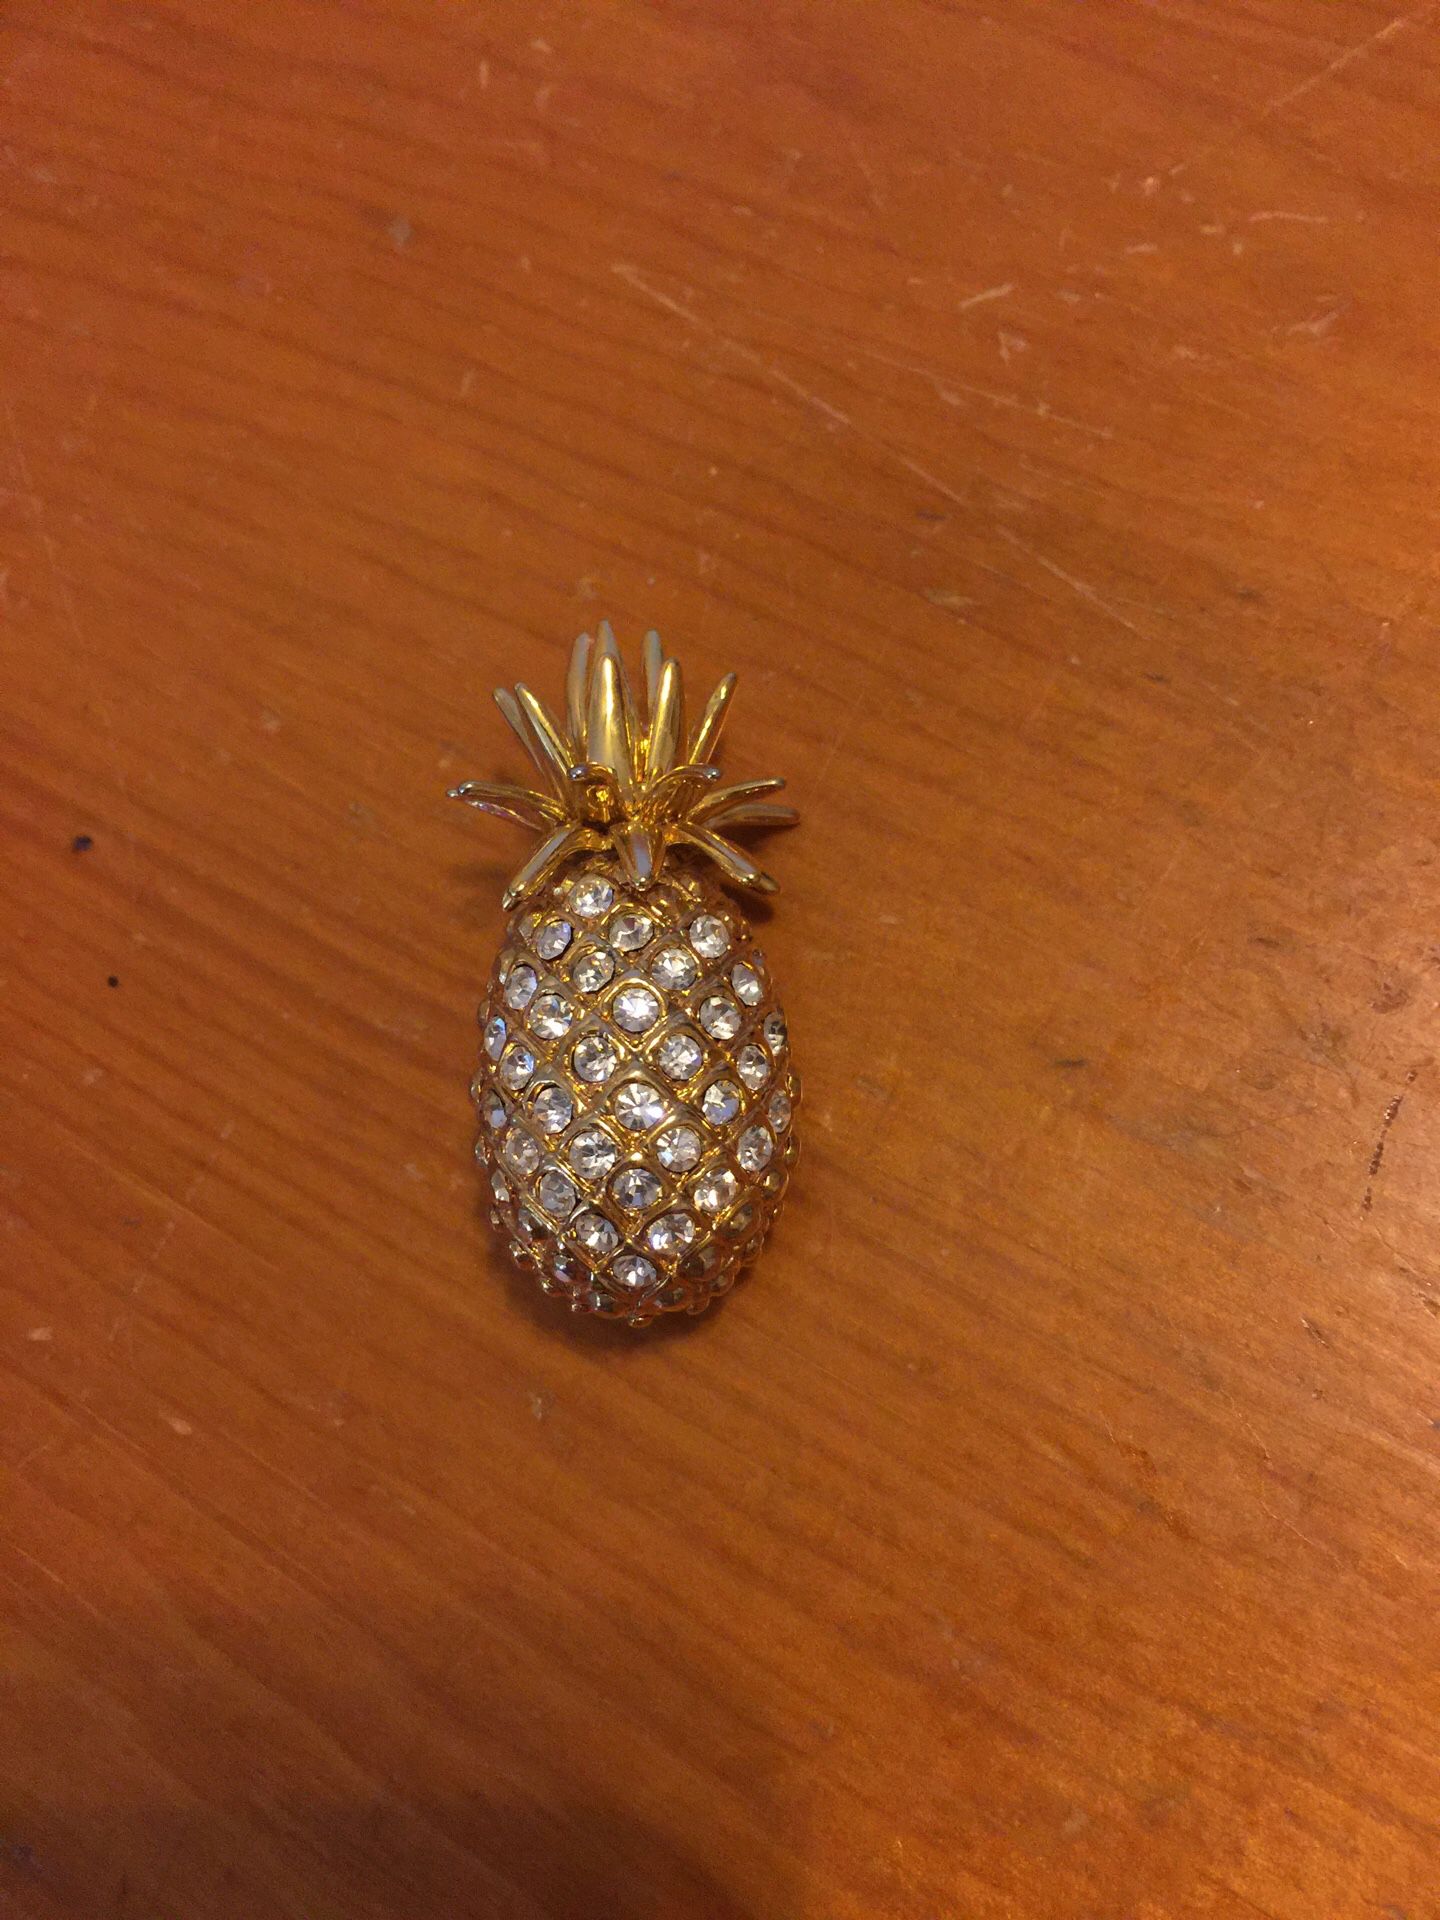 Gold tone pineapple brooch